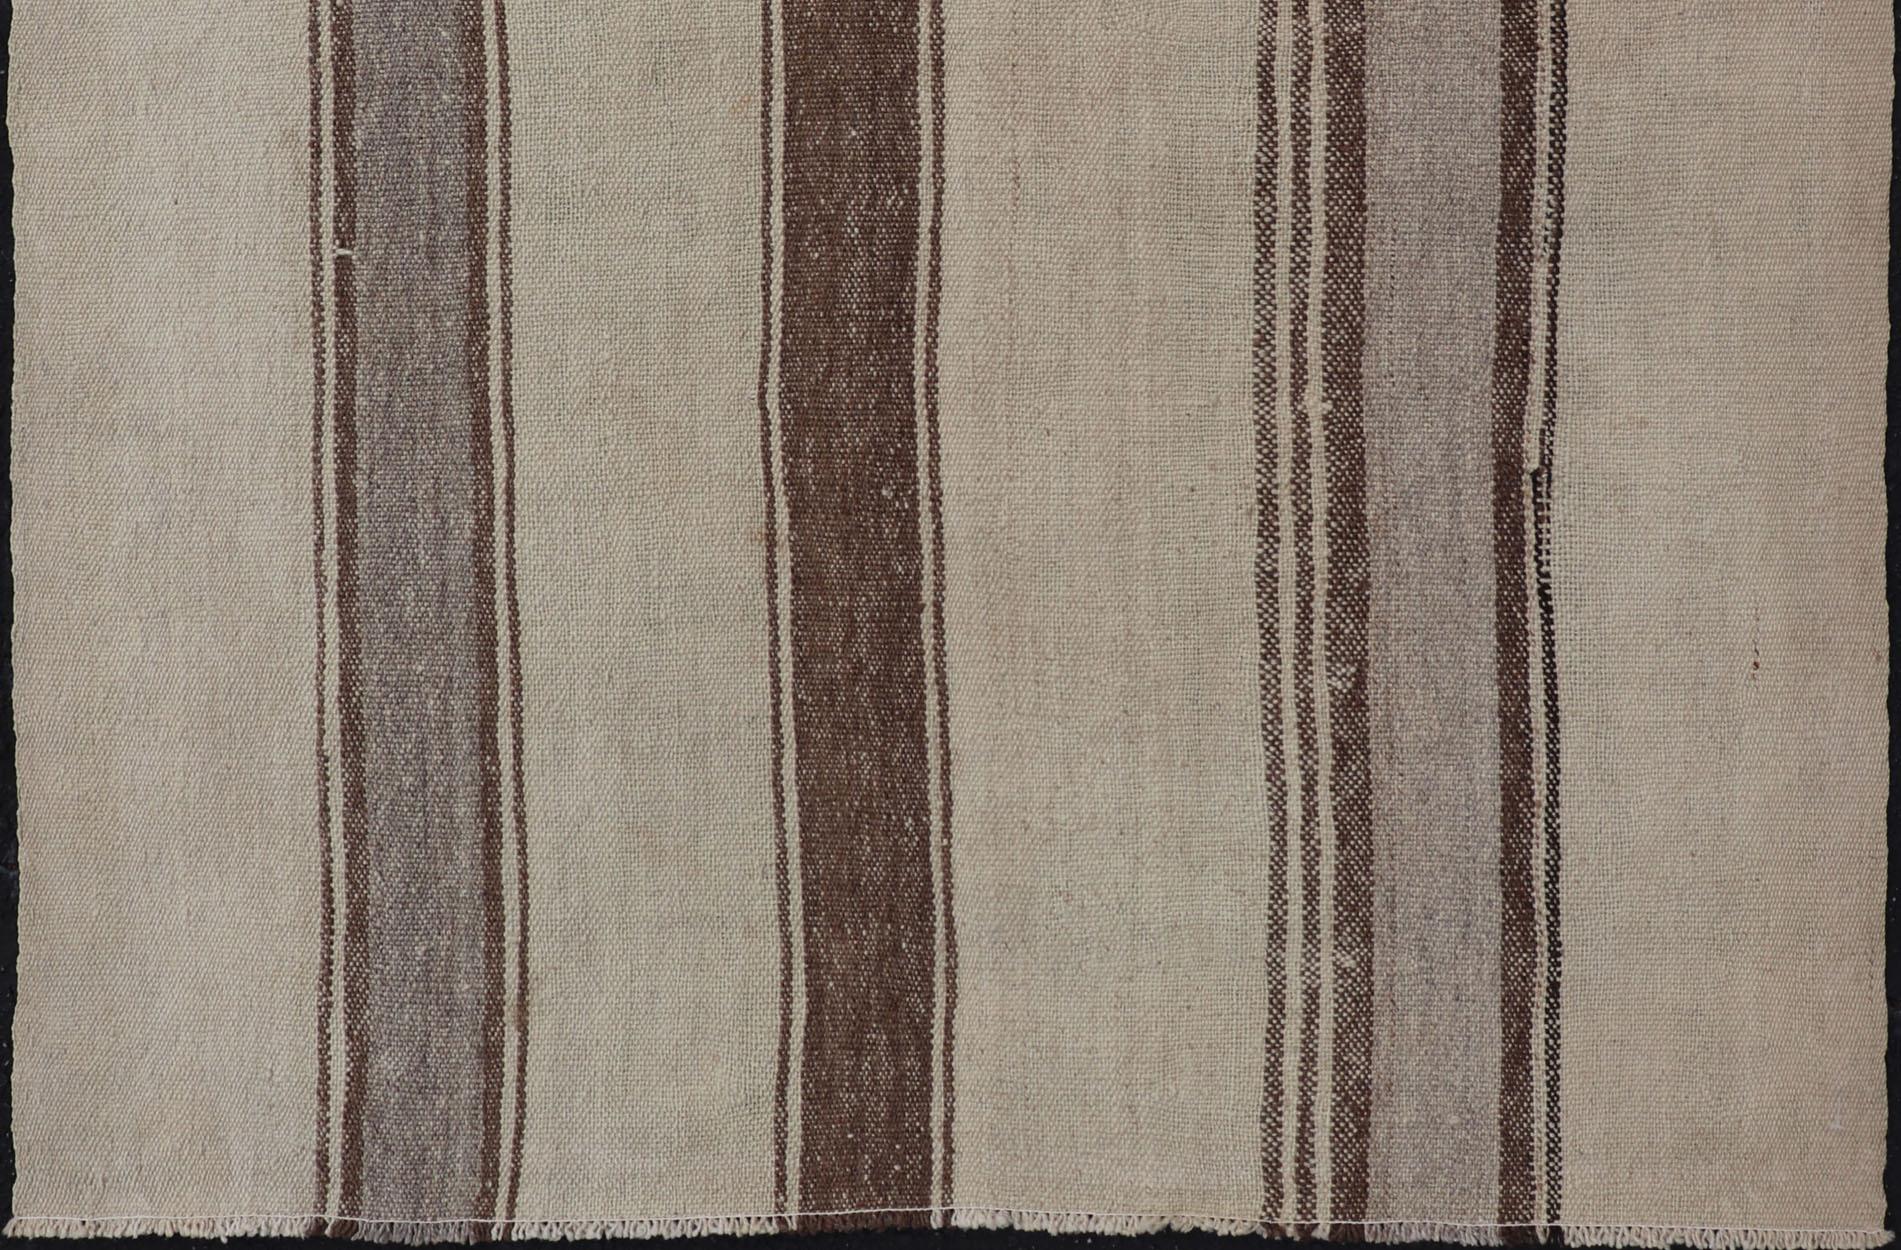 Vintage Kilim small rug in tan, gray, taupe, cream & brown. Keivan Woven Arts rug EN-178677, country of origin / type: Turkey / Kilim, circa mid-20th century.

Measures: 4'3 x 5'7.